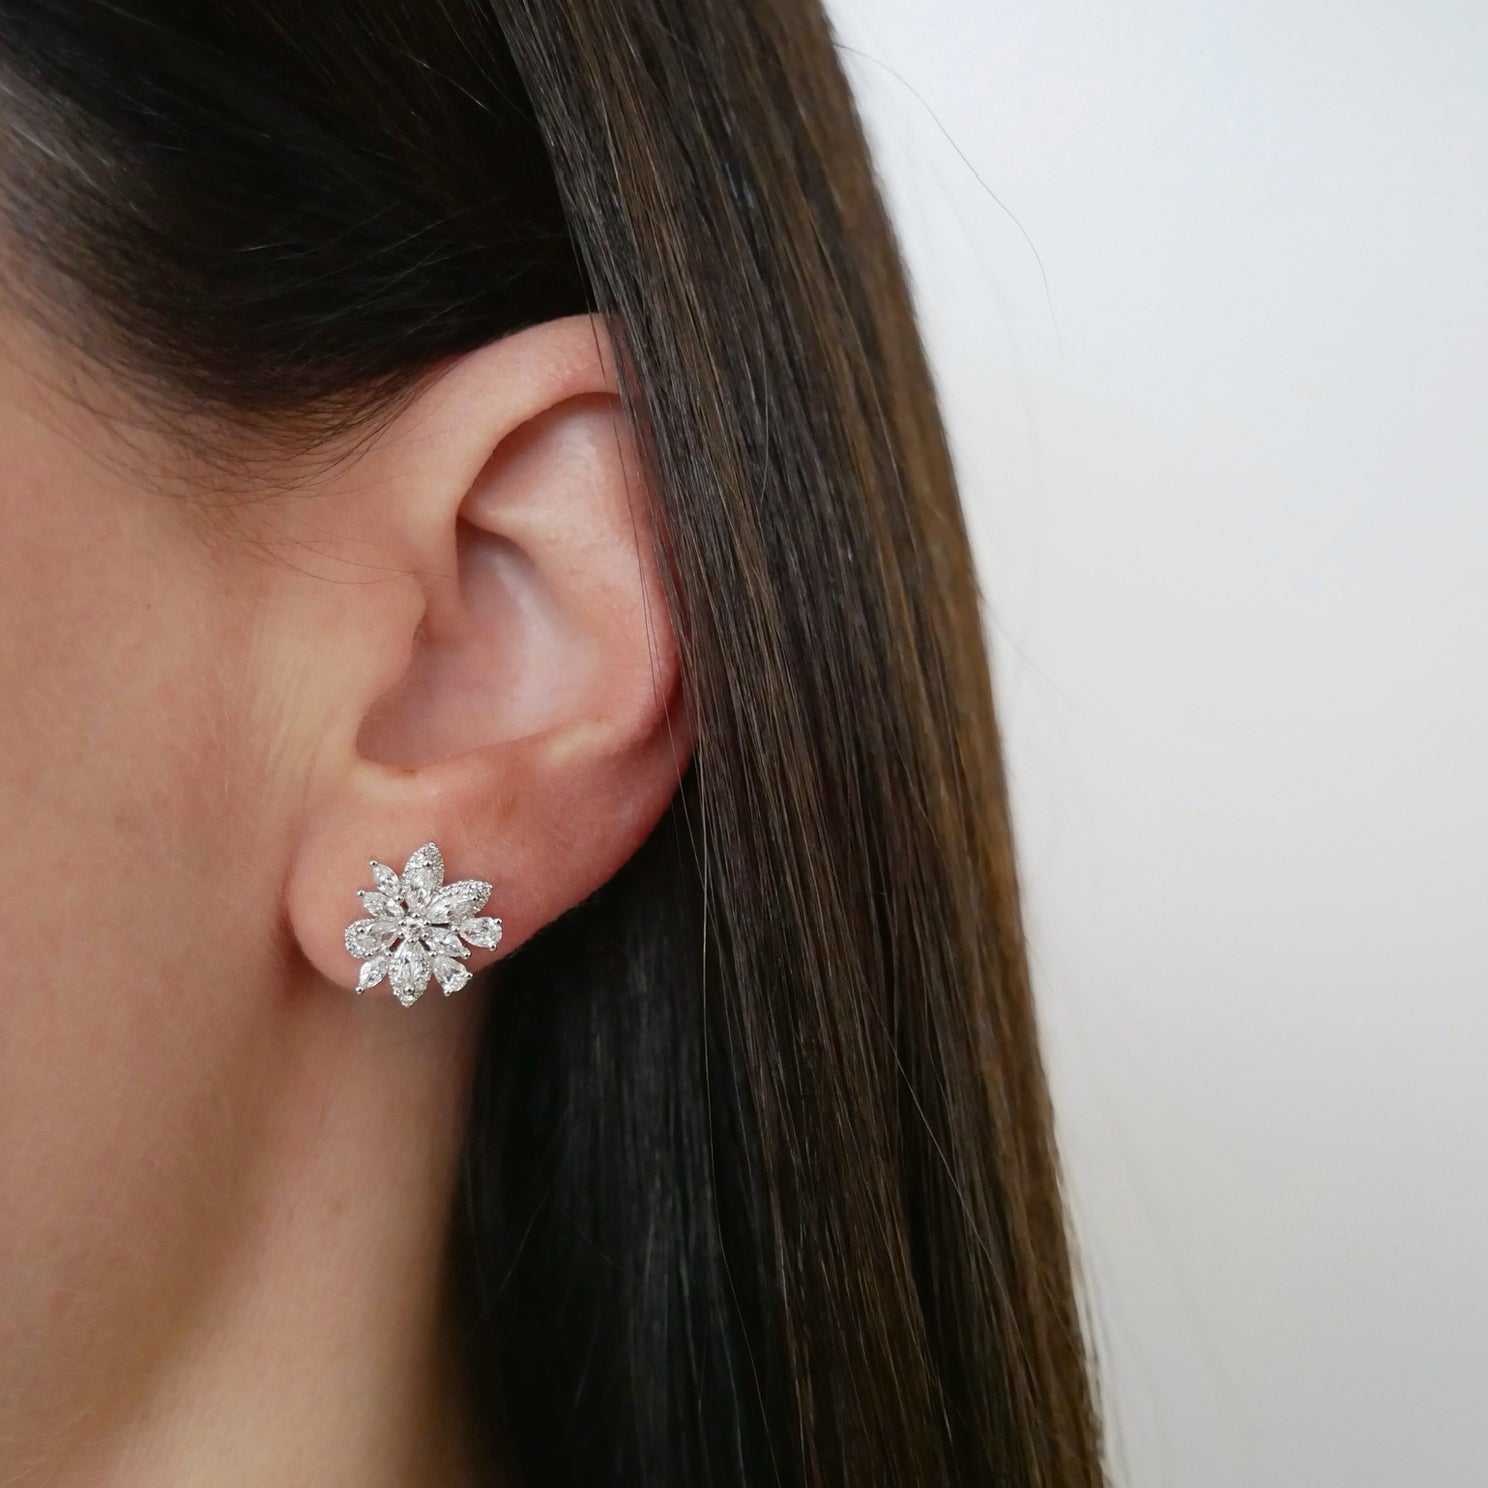 Marquise Diamond Cluster Stud Earrings in 14k white gold styled on ear of model